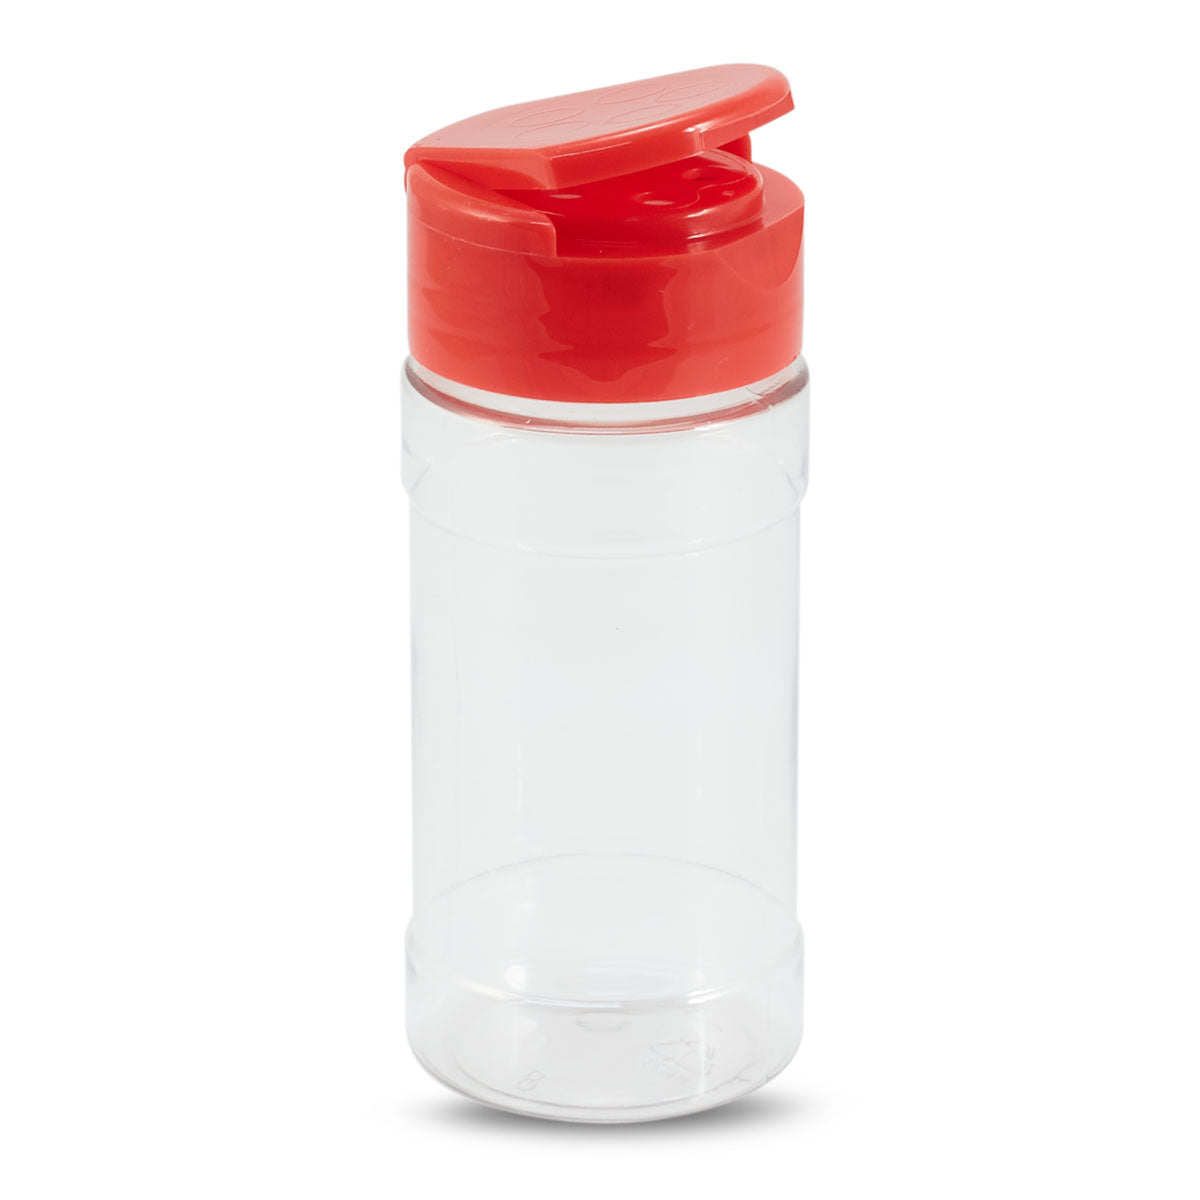 4 oz Plastic Sugar Shaker (24/case)